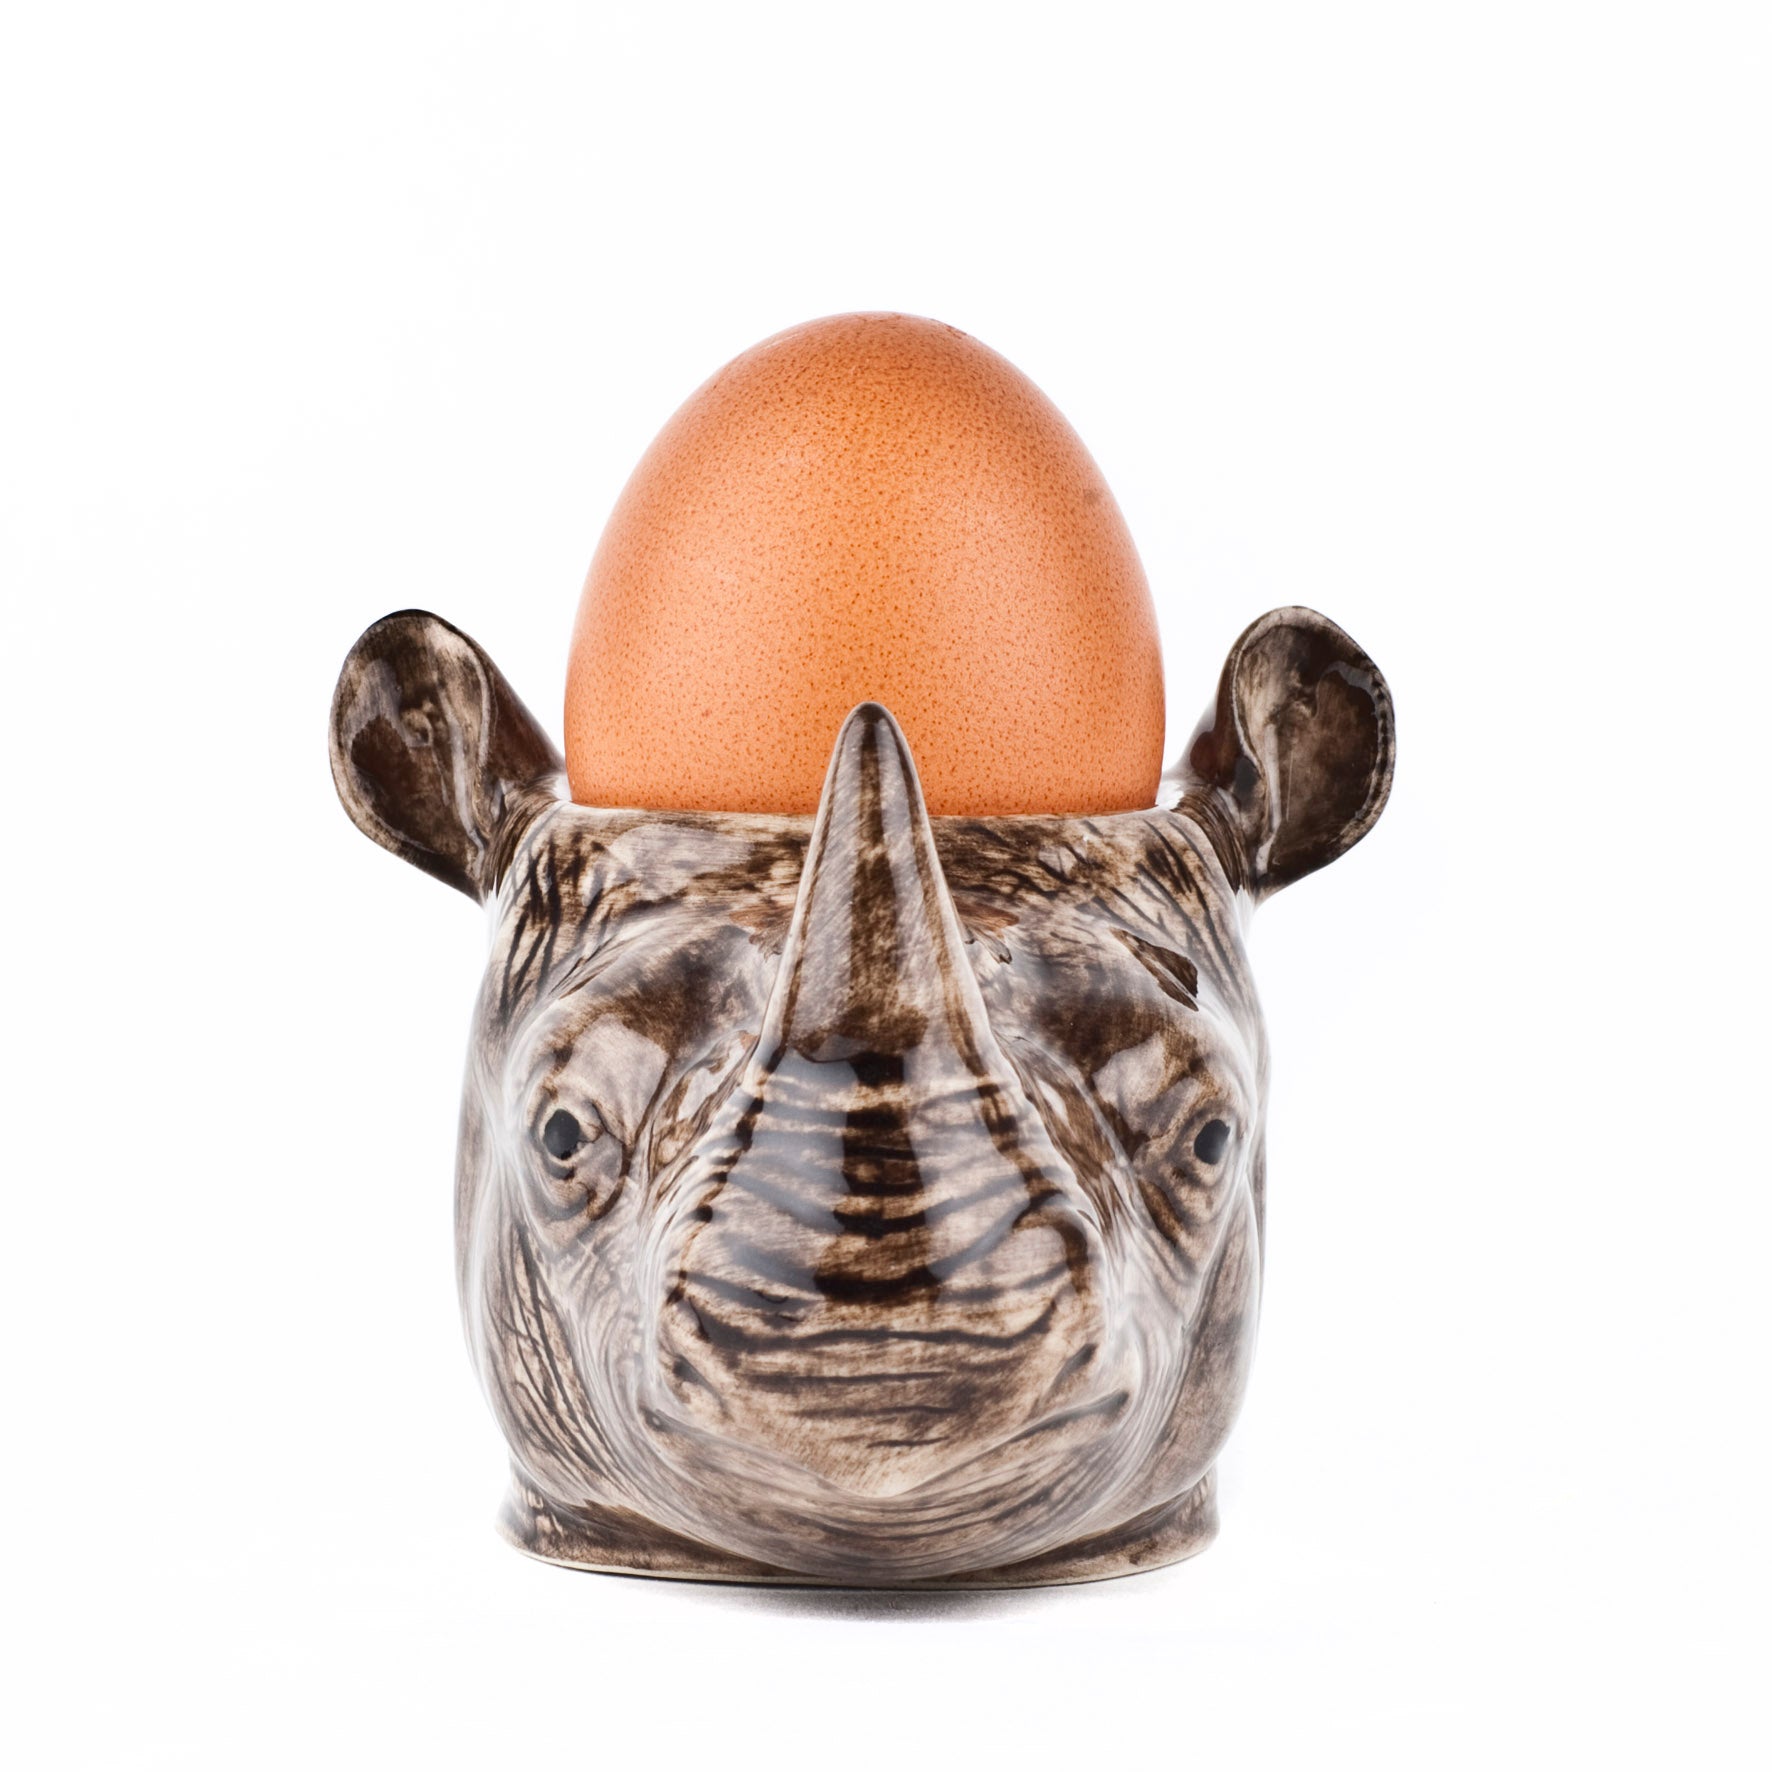 Rhino face egg cup